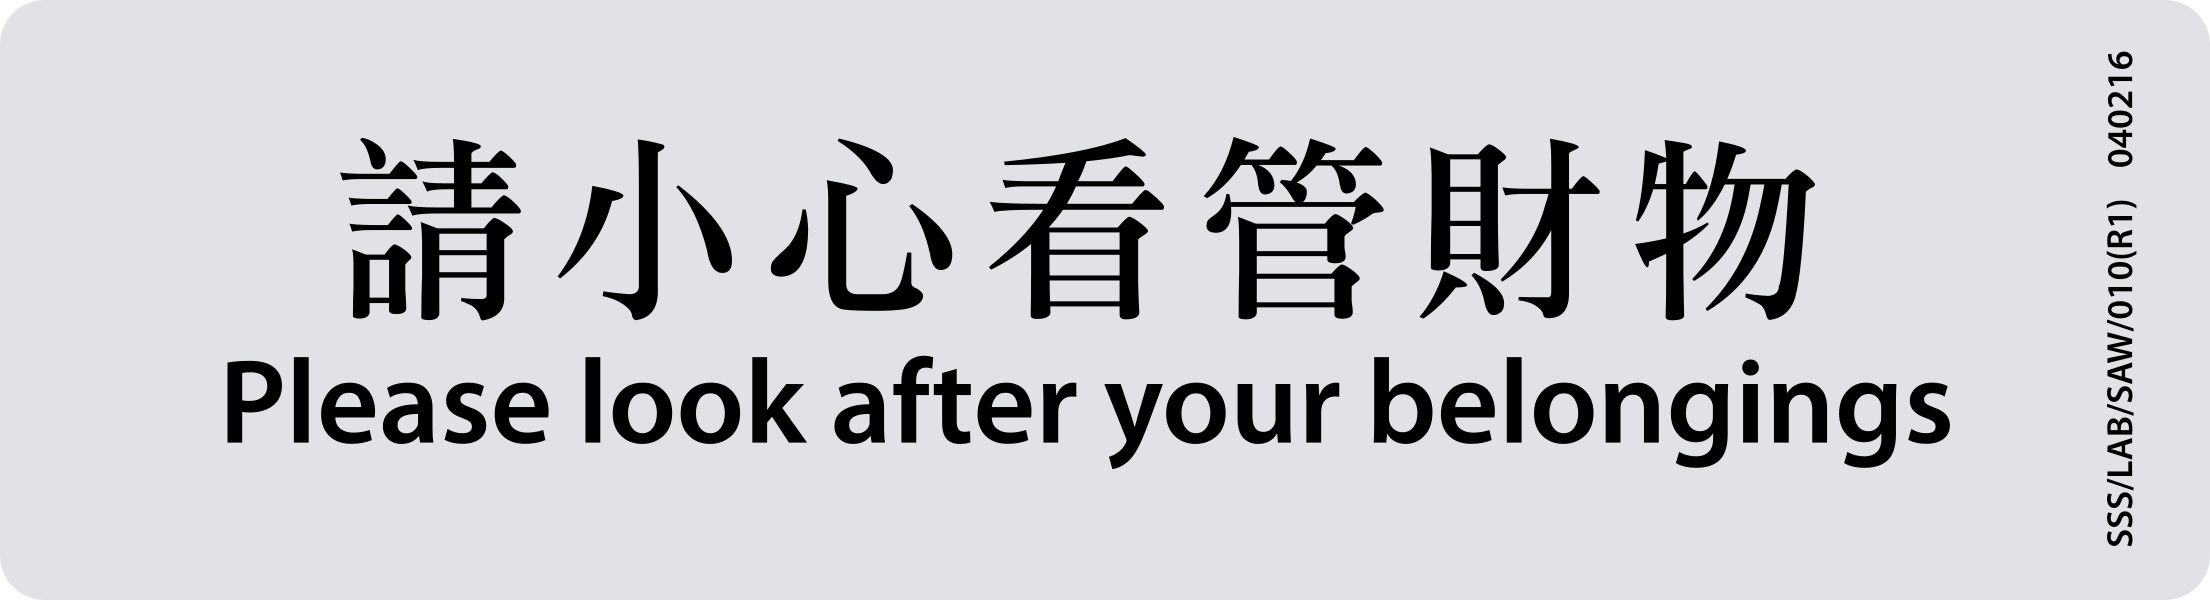 MTR sticker: Please look after your belongings